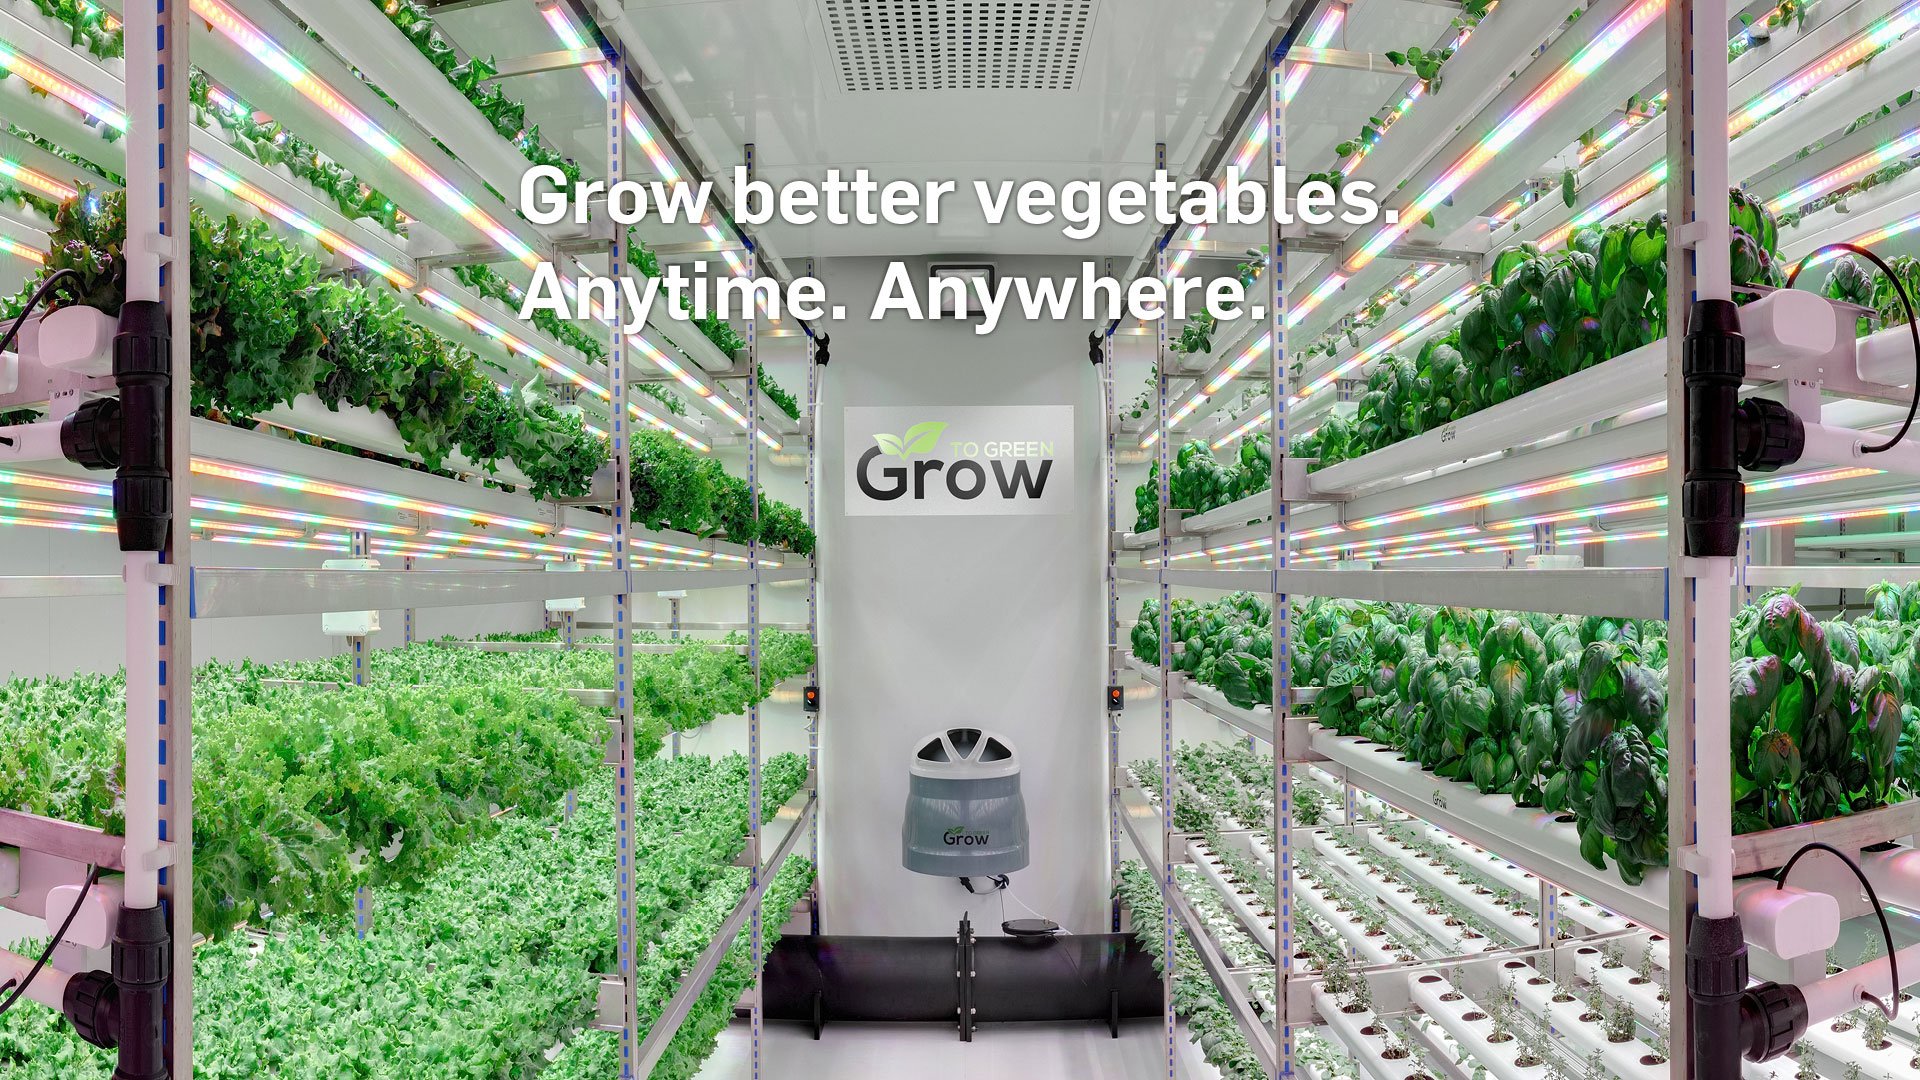 Grow better vegetables anytime anywhere